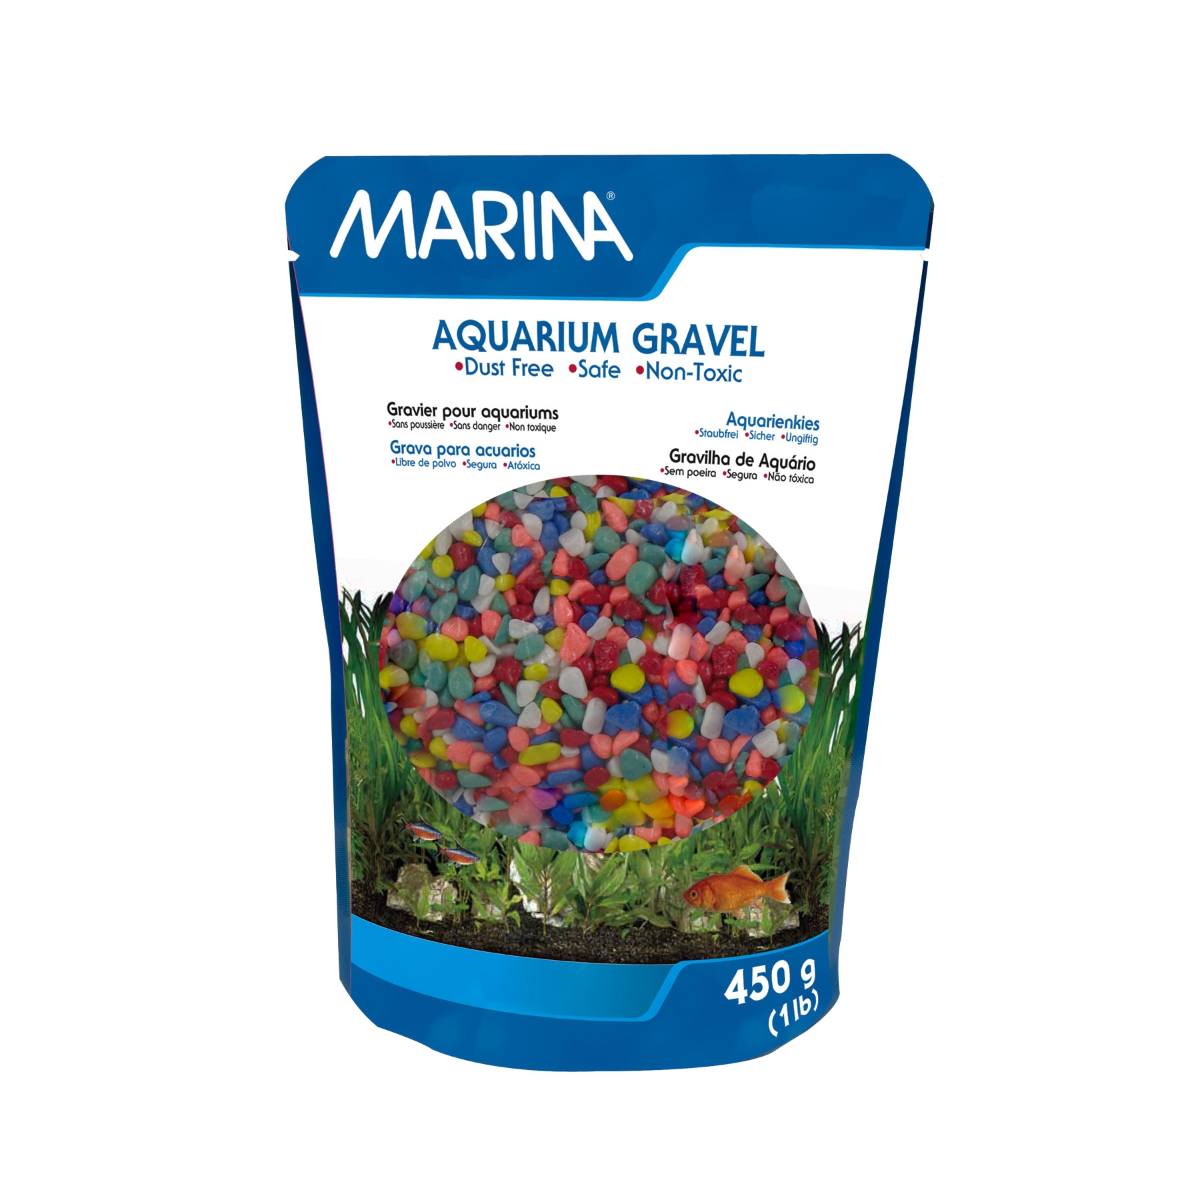 Marina Rainbow Decorative Aquarium Gravel - 1 lb